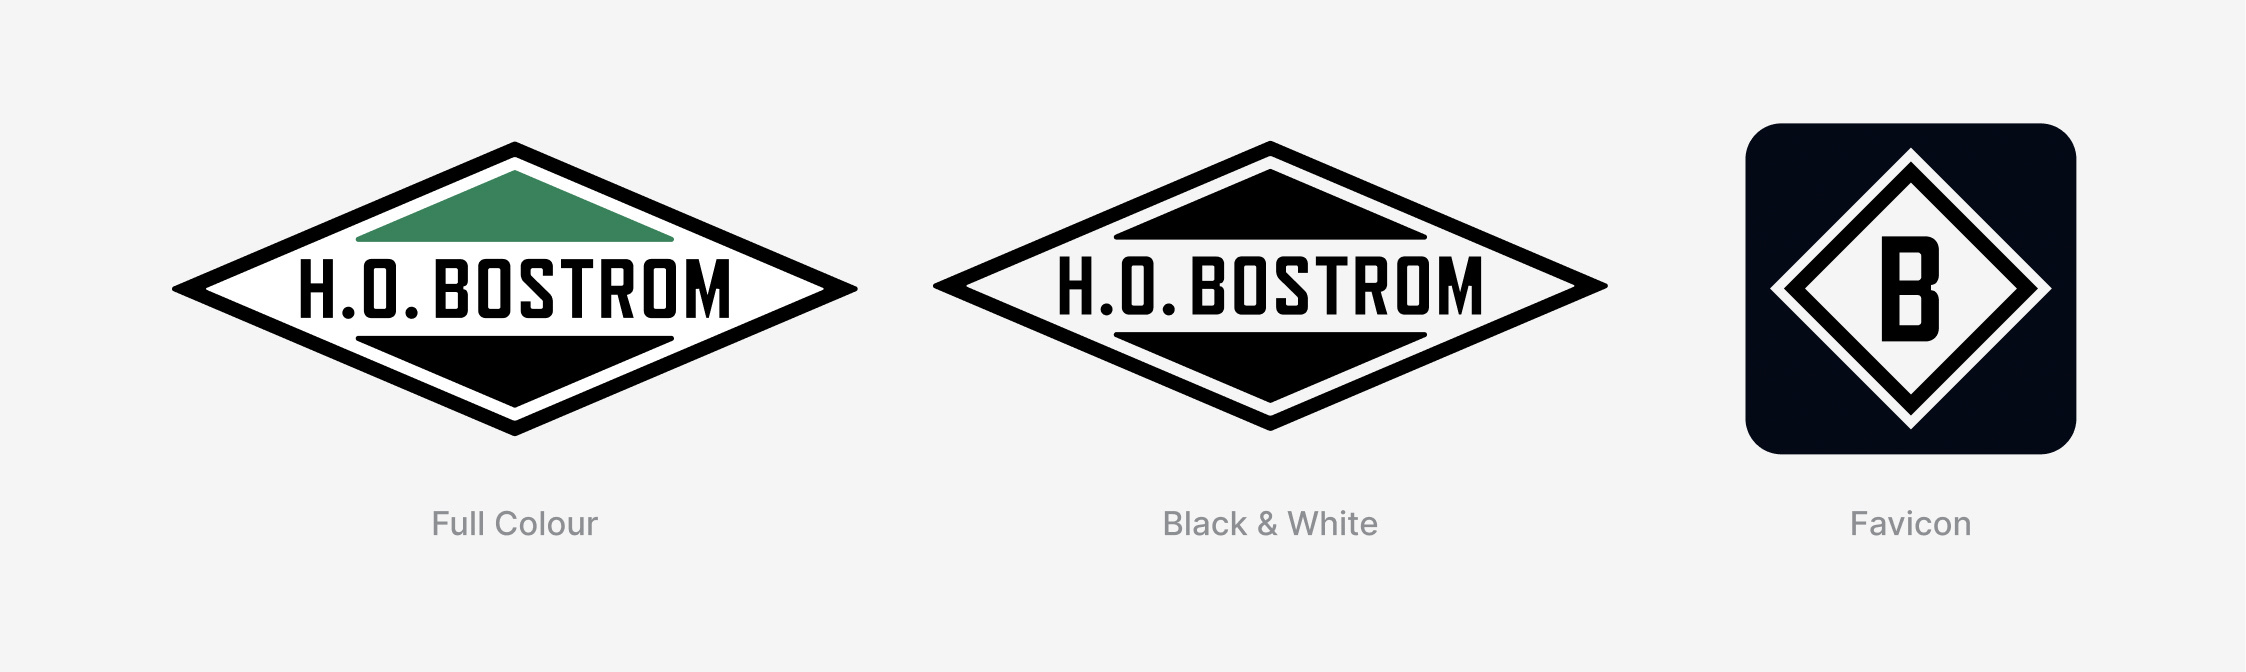 H.O. Bostrom logo variants